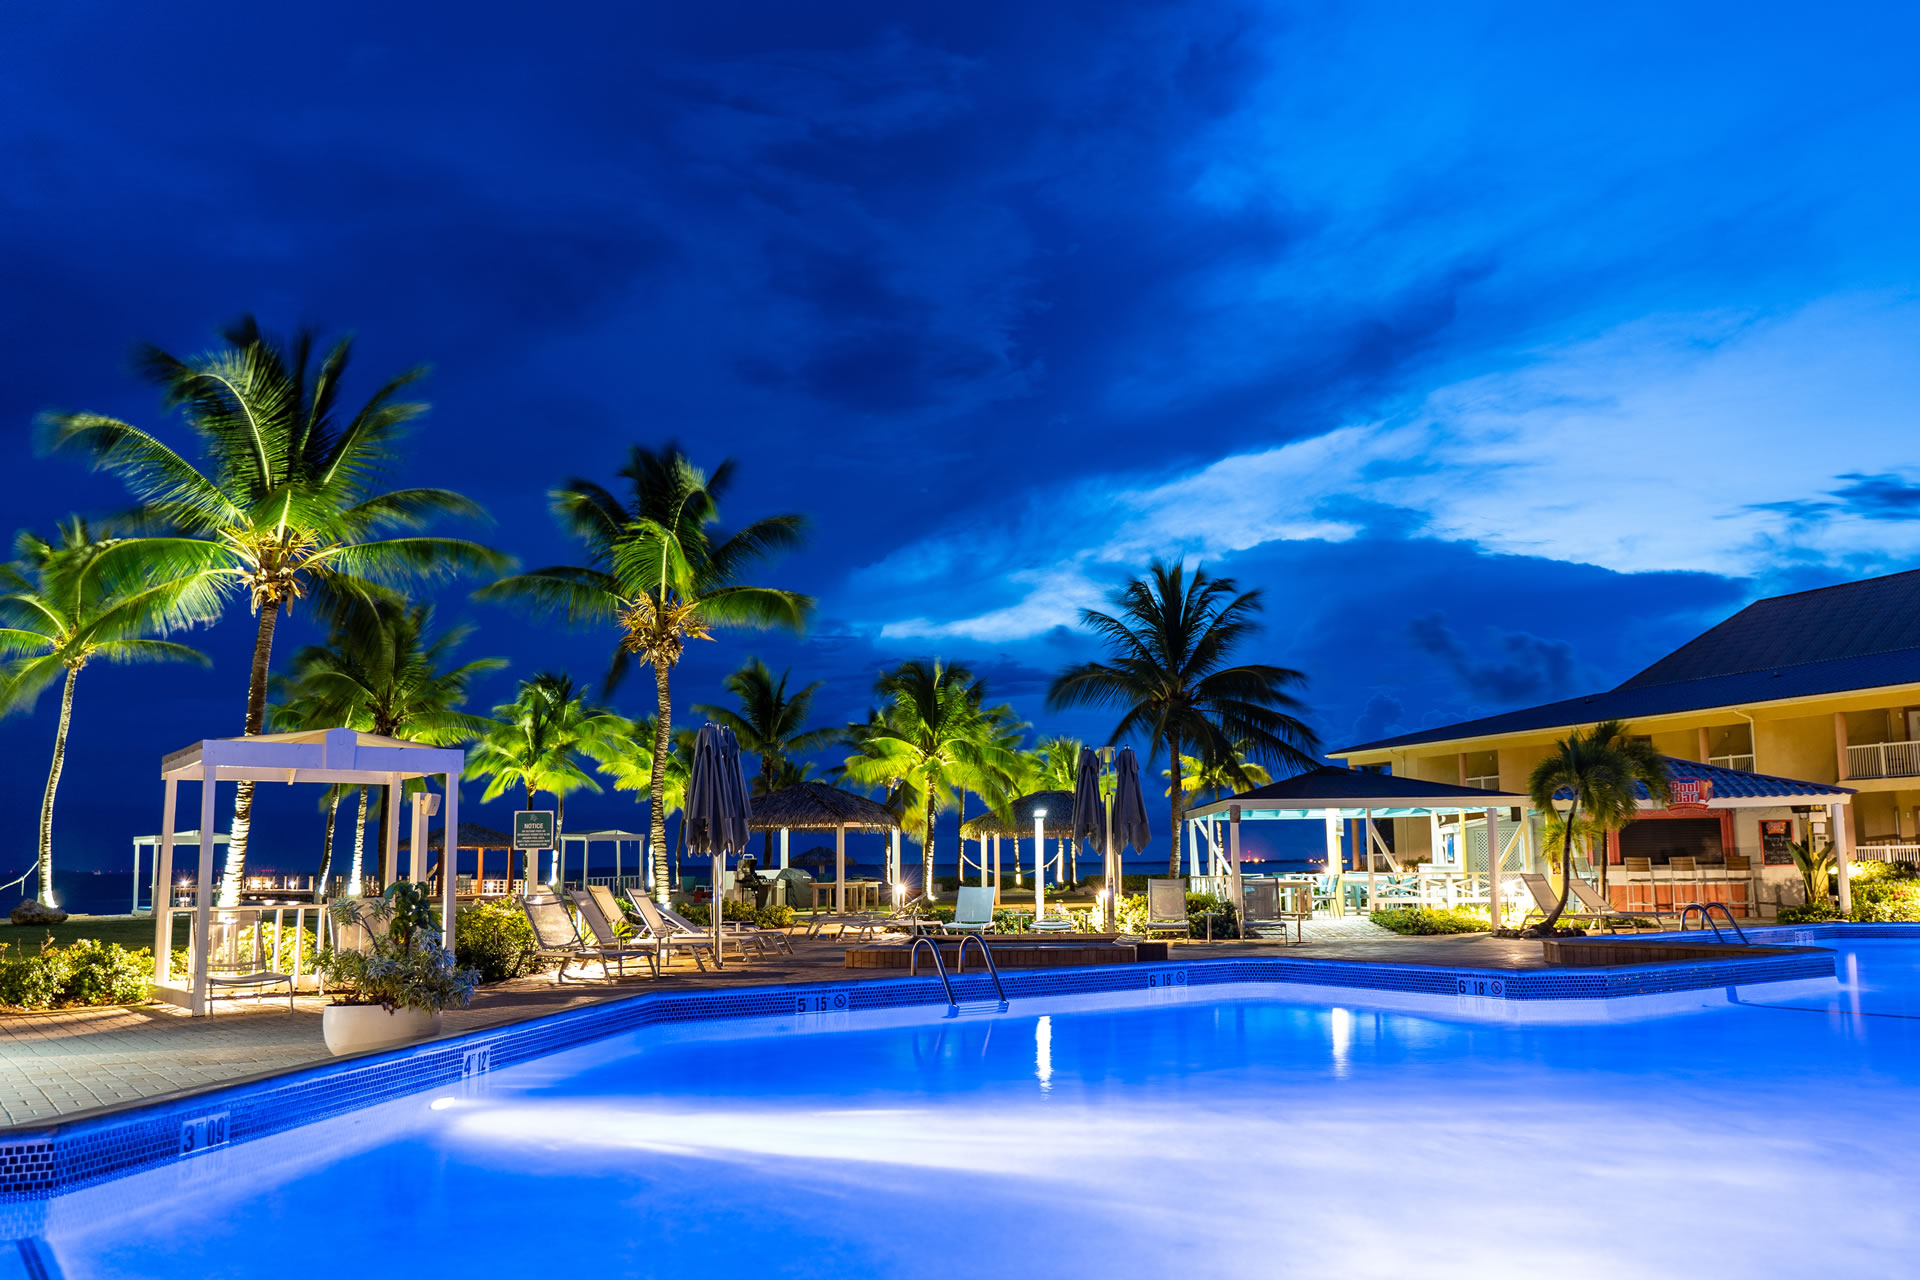 Grand Caymanian Resort pool at night.